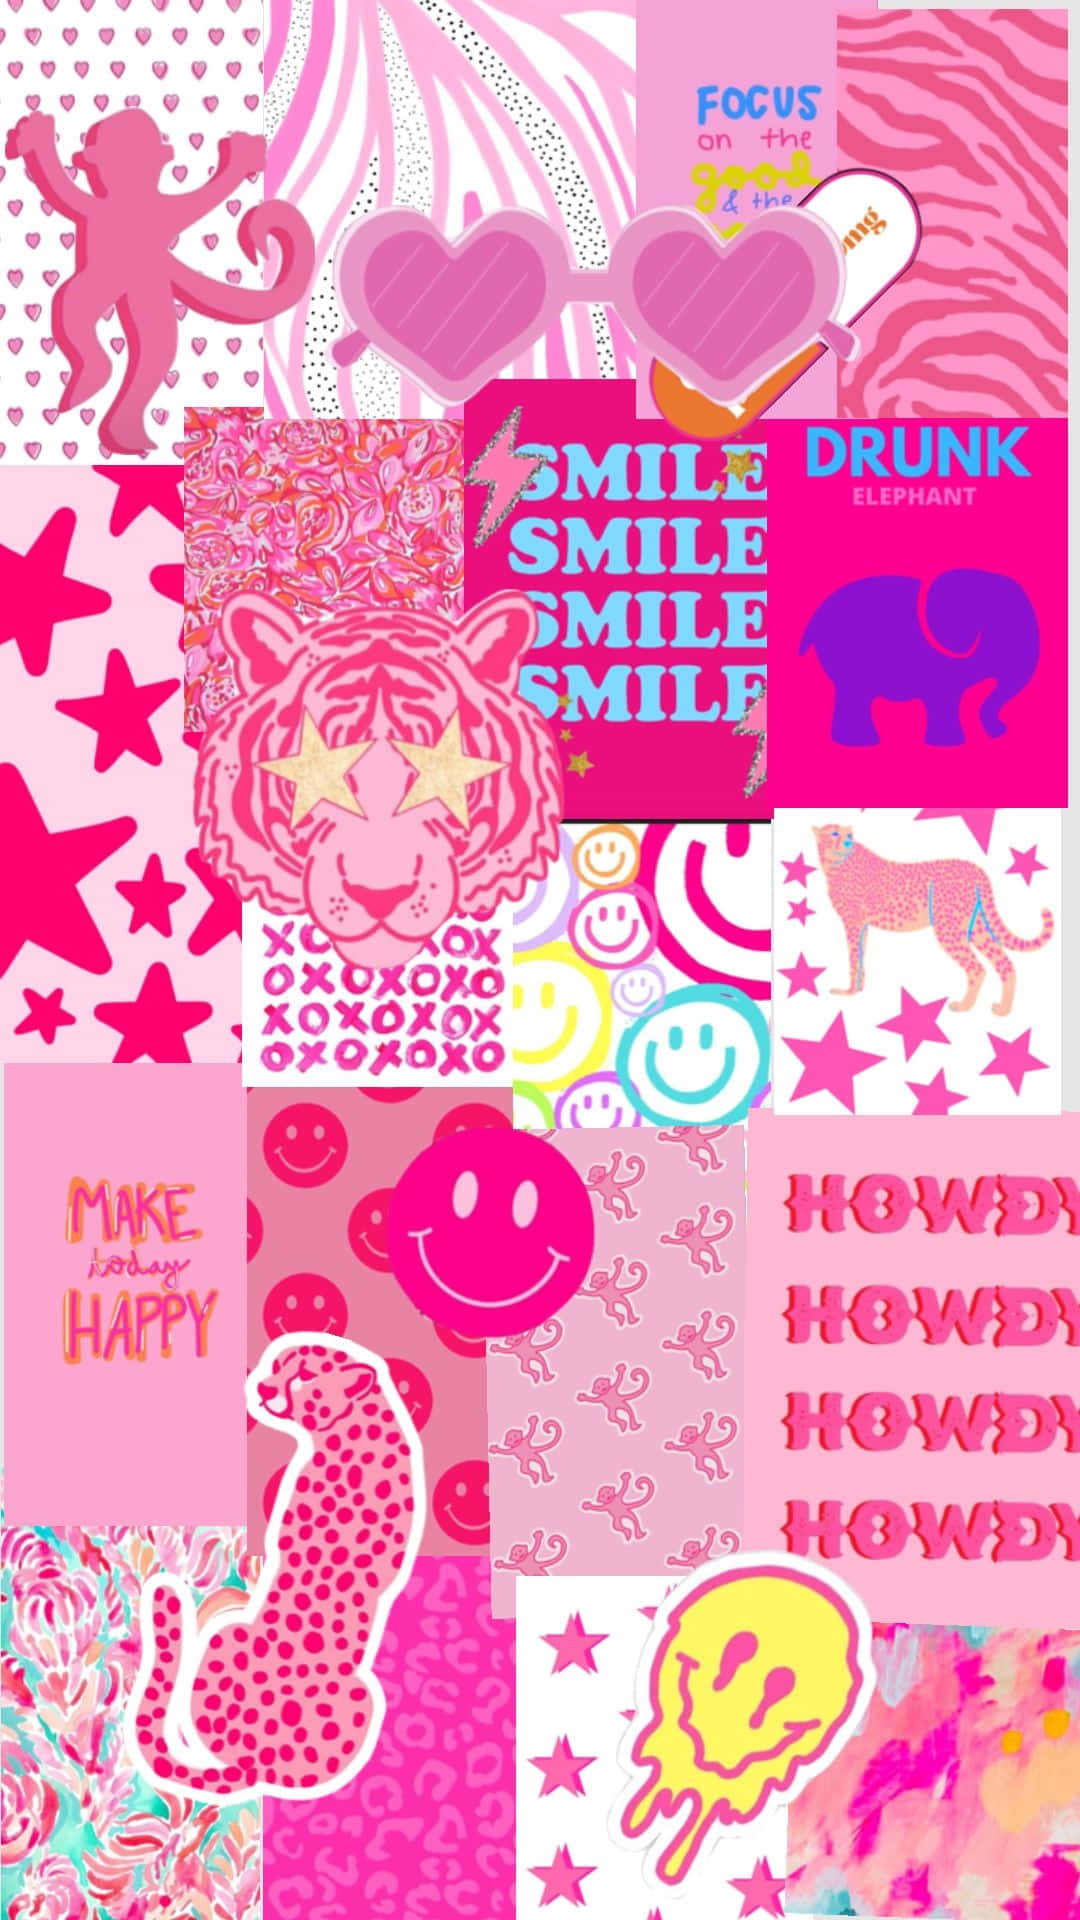 Preppy Pink Collage Aesthetic.jpg Wallpaper